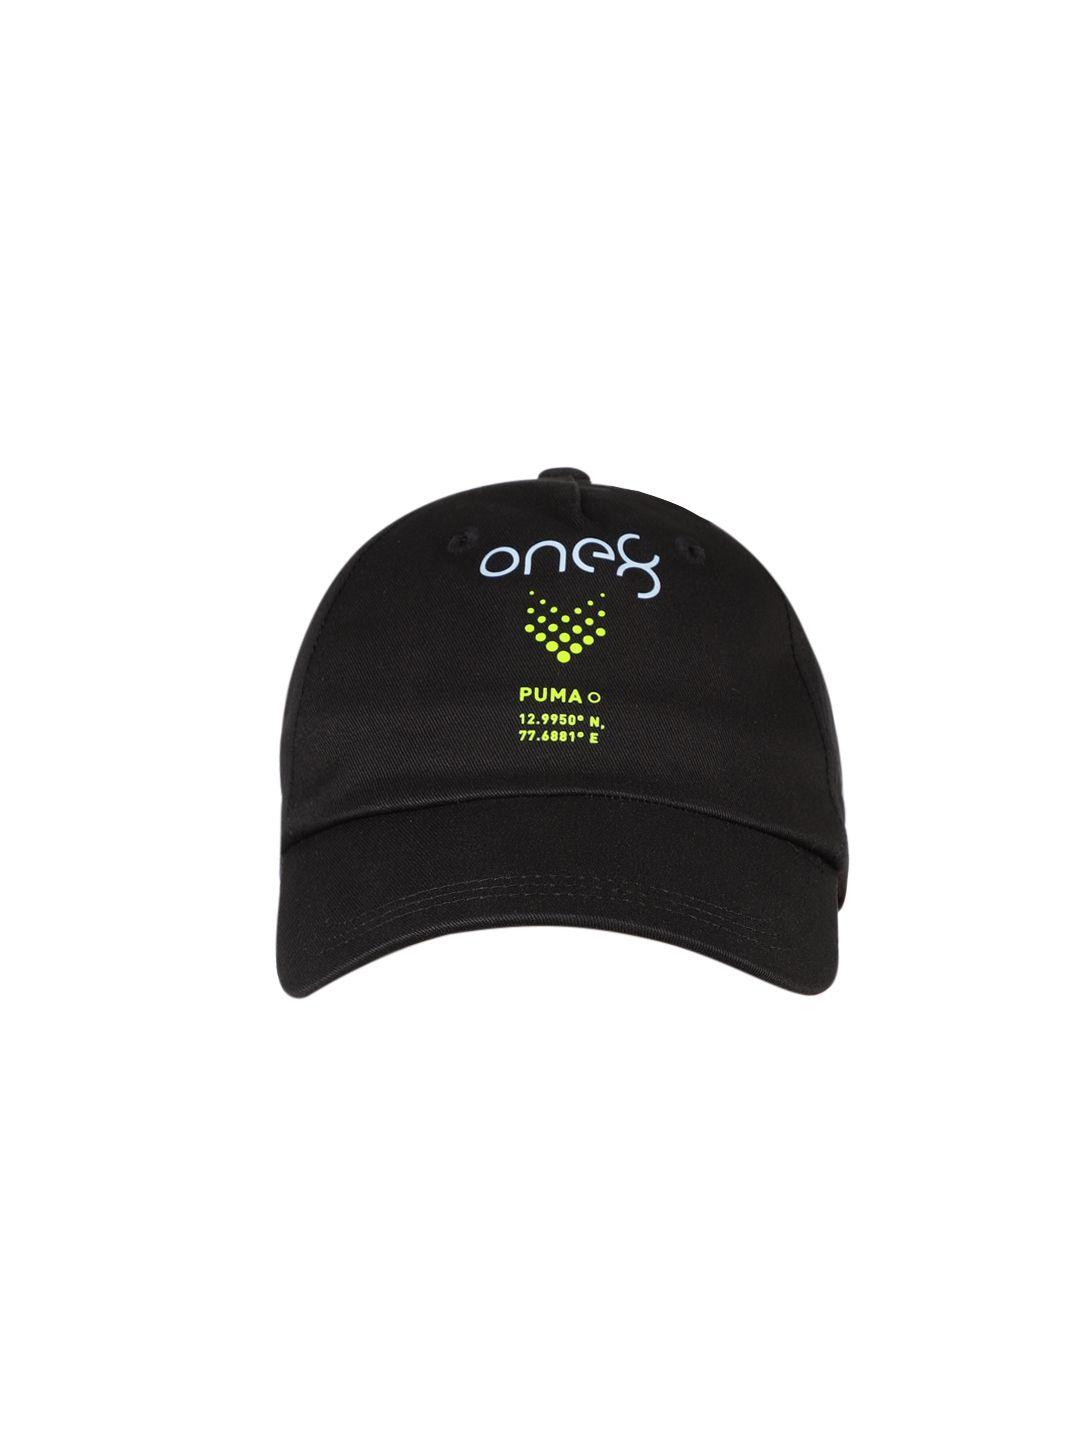 one8 x puma unisex brand logo printed baseball cap